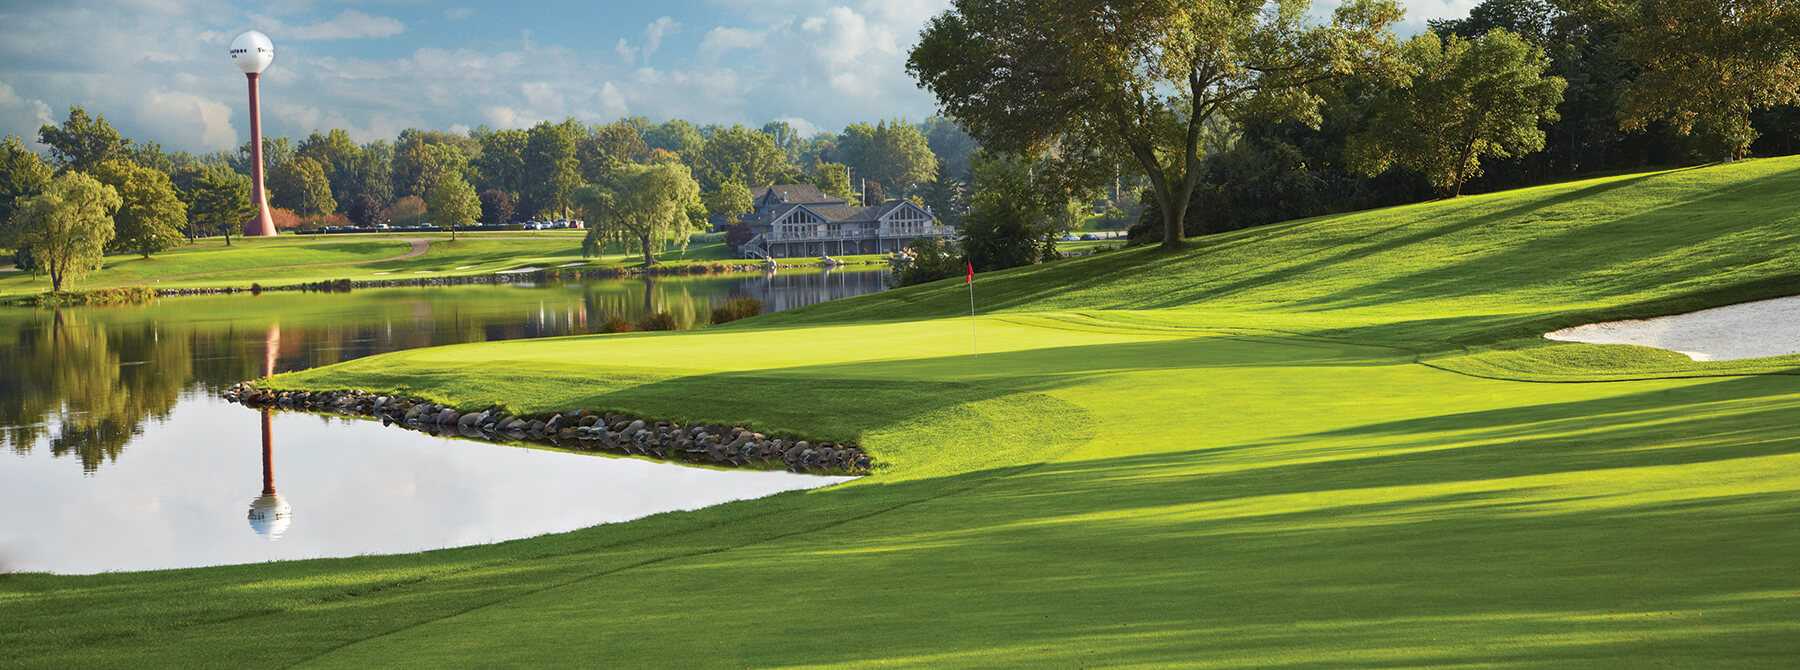 Glen Oaks Golf Course 